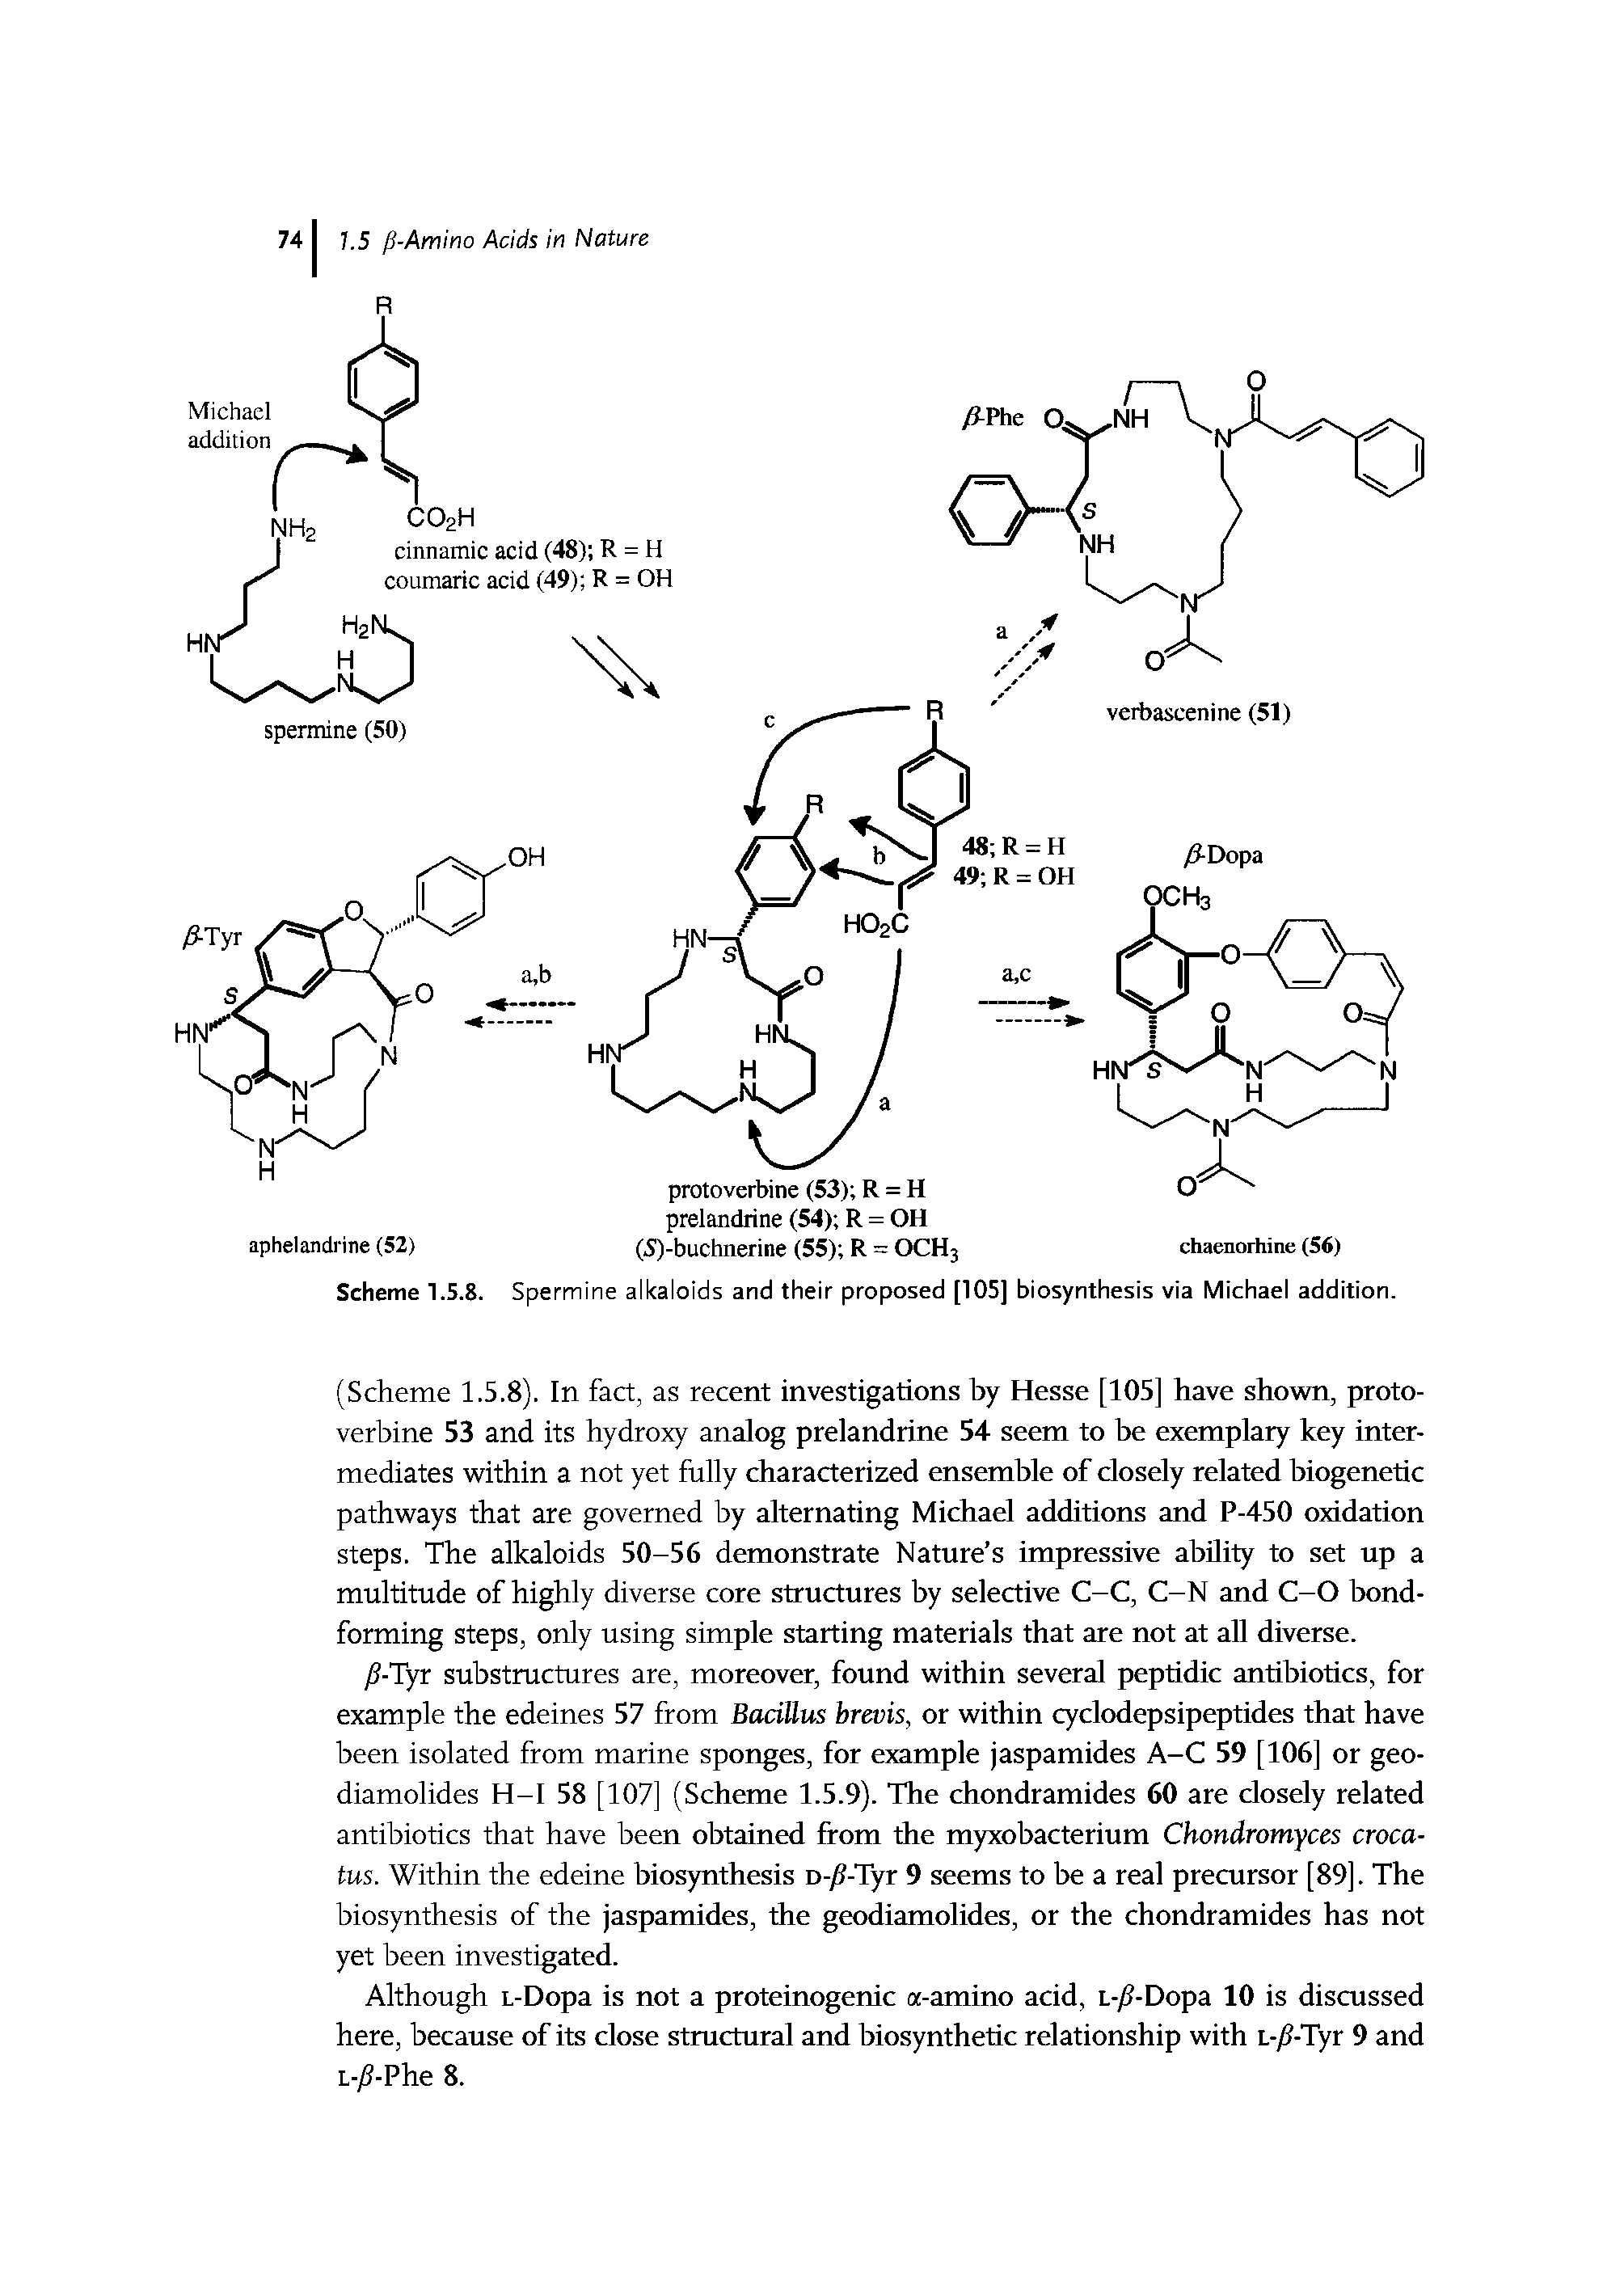 Scheme 1.5.8. Spermine alkaloids and their proposed [105] biosynthesis via Michael addition.